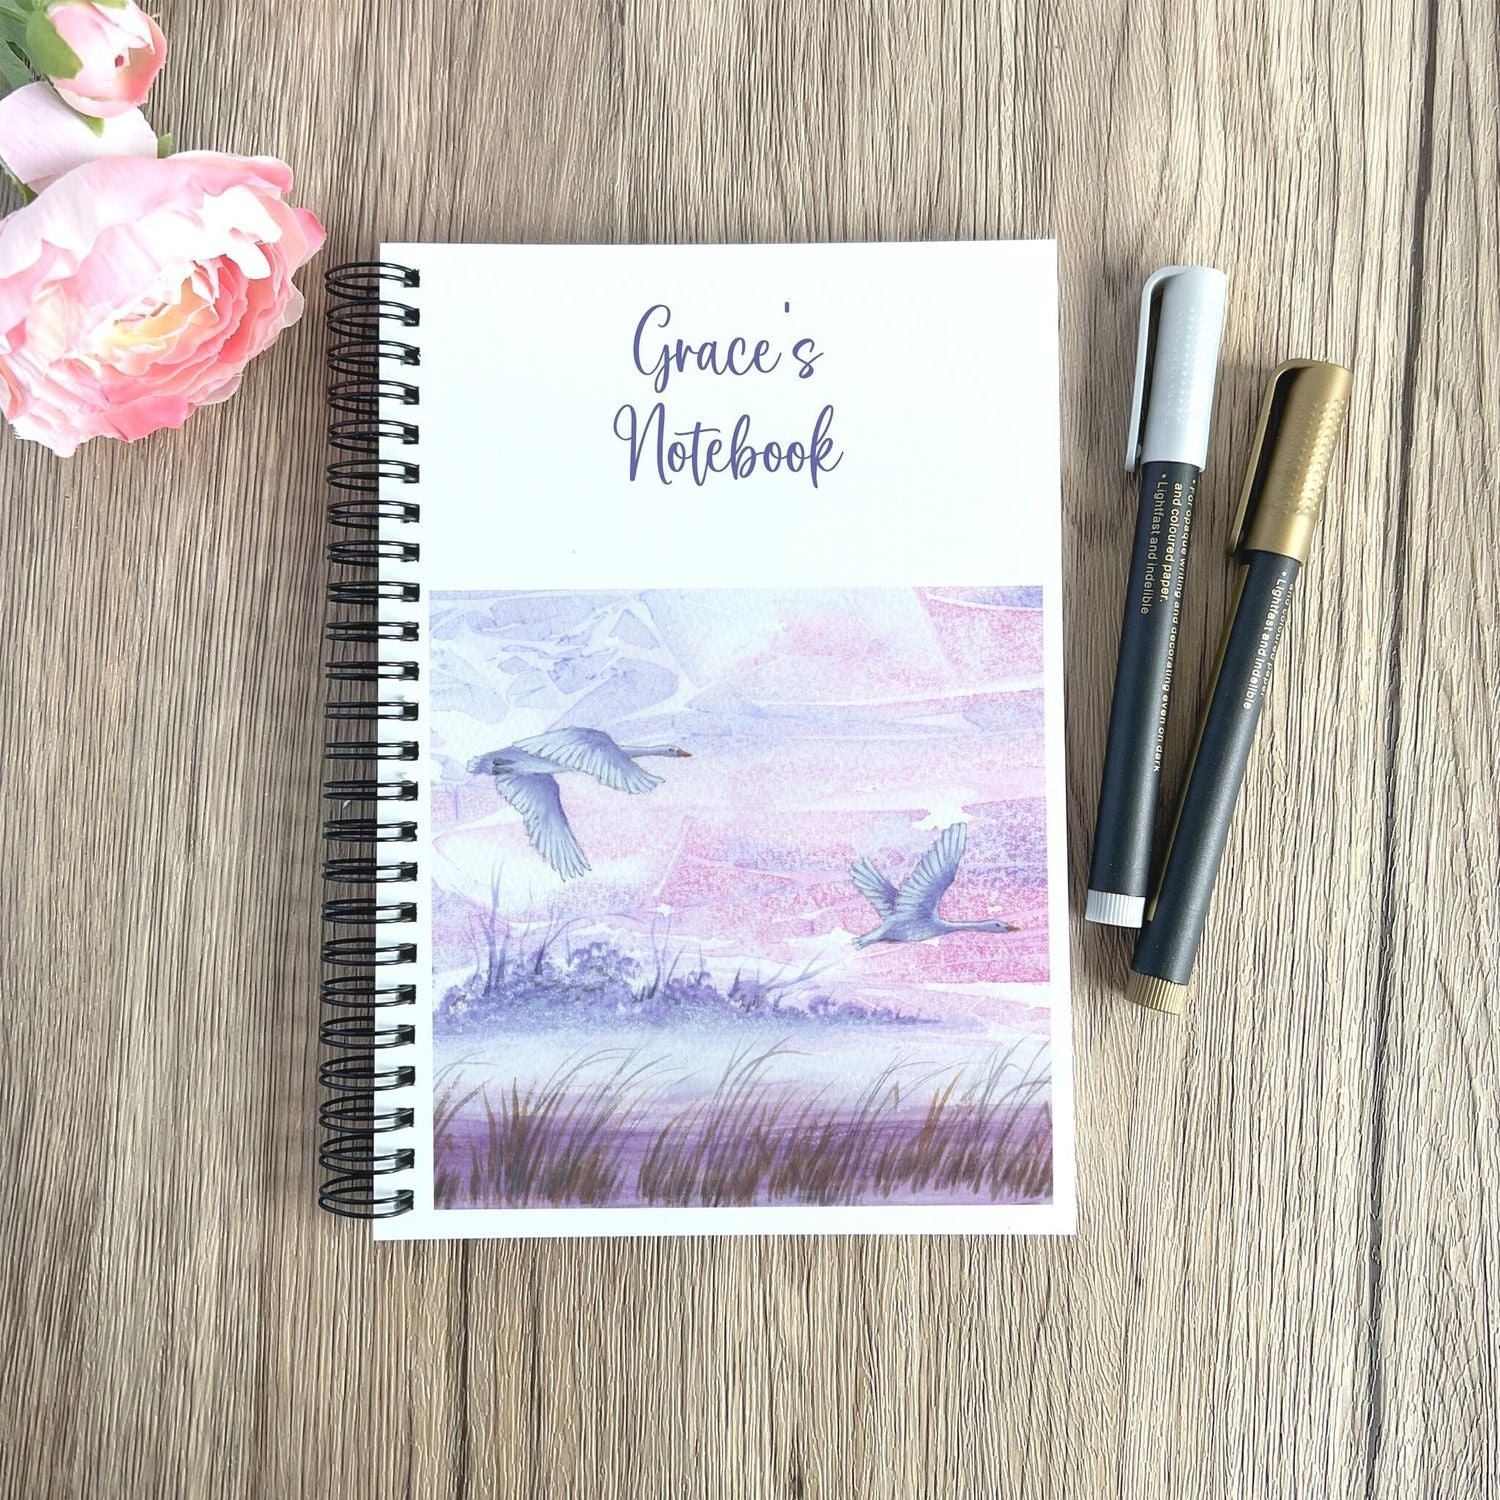 geese-notebook